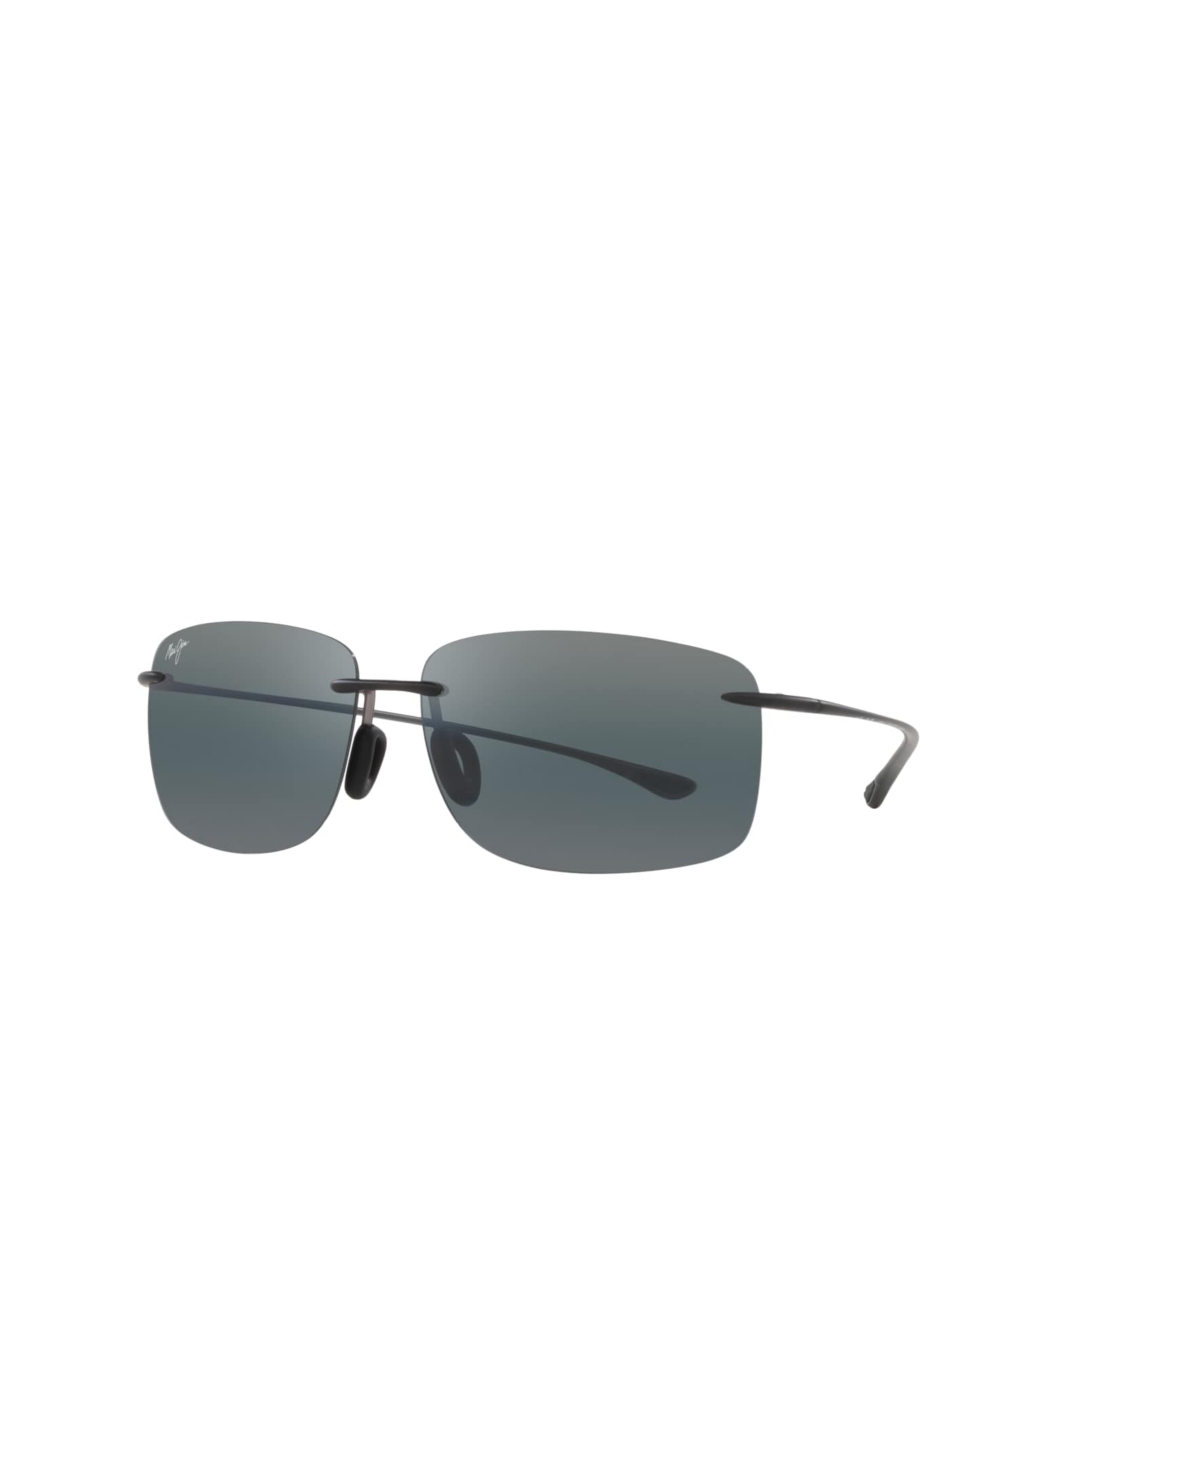 Maui Jim Unisex Polarized Sunglasses, Hema Mj000703 In Gray